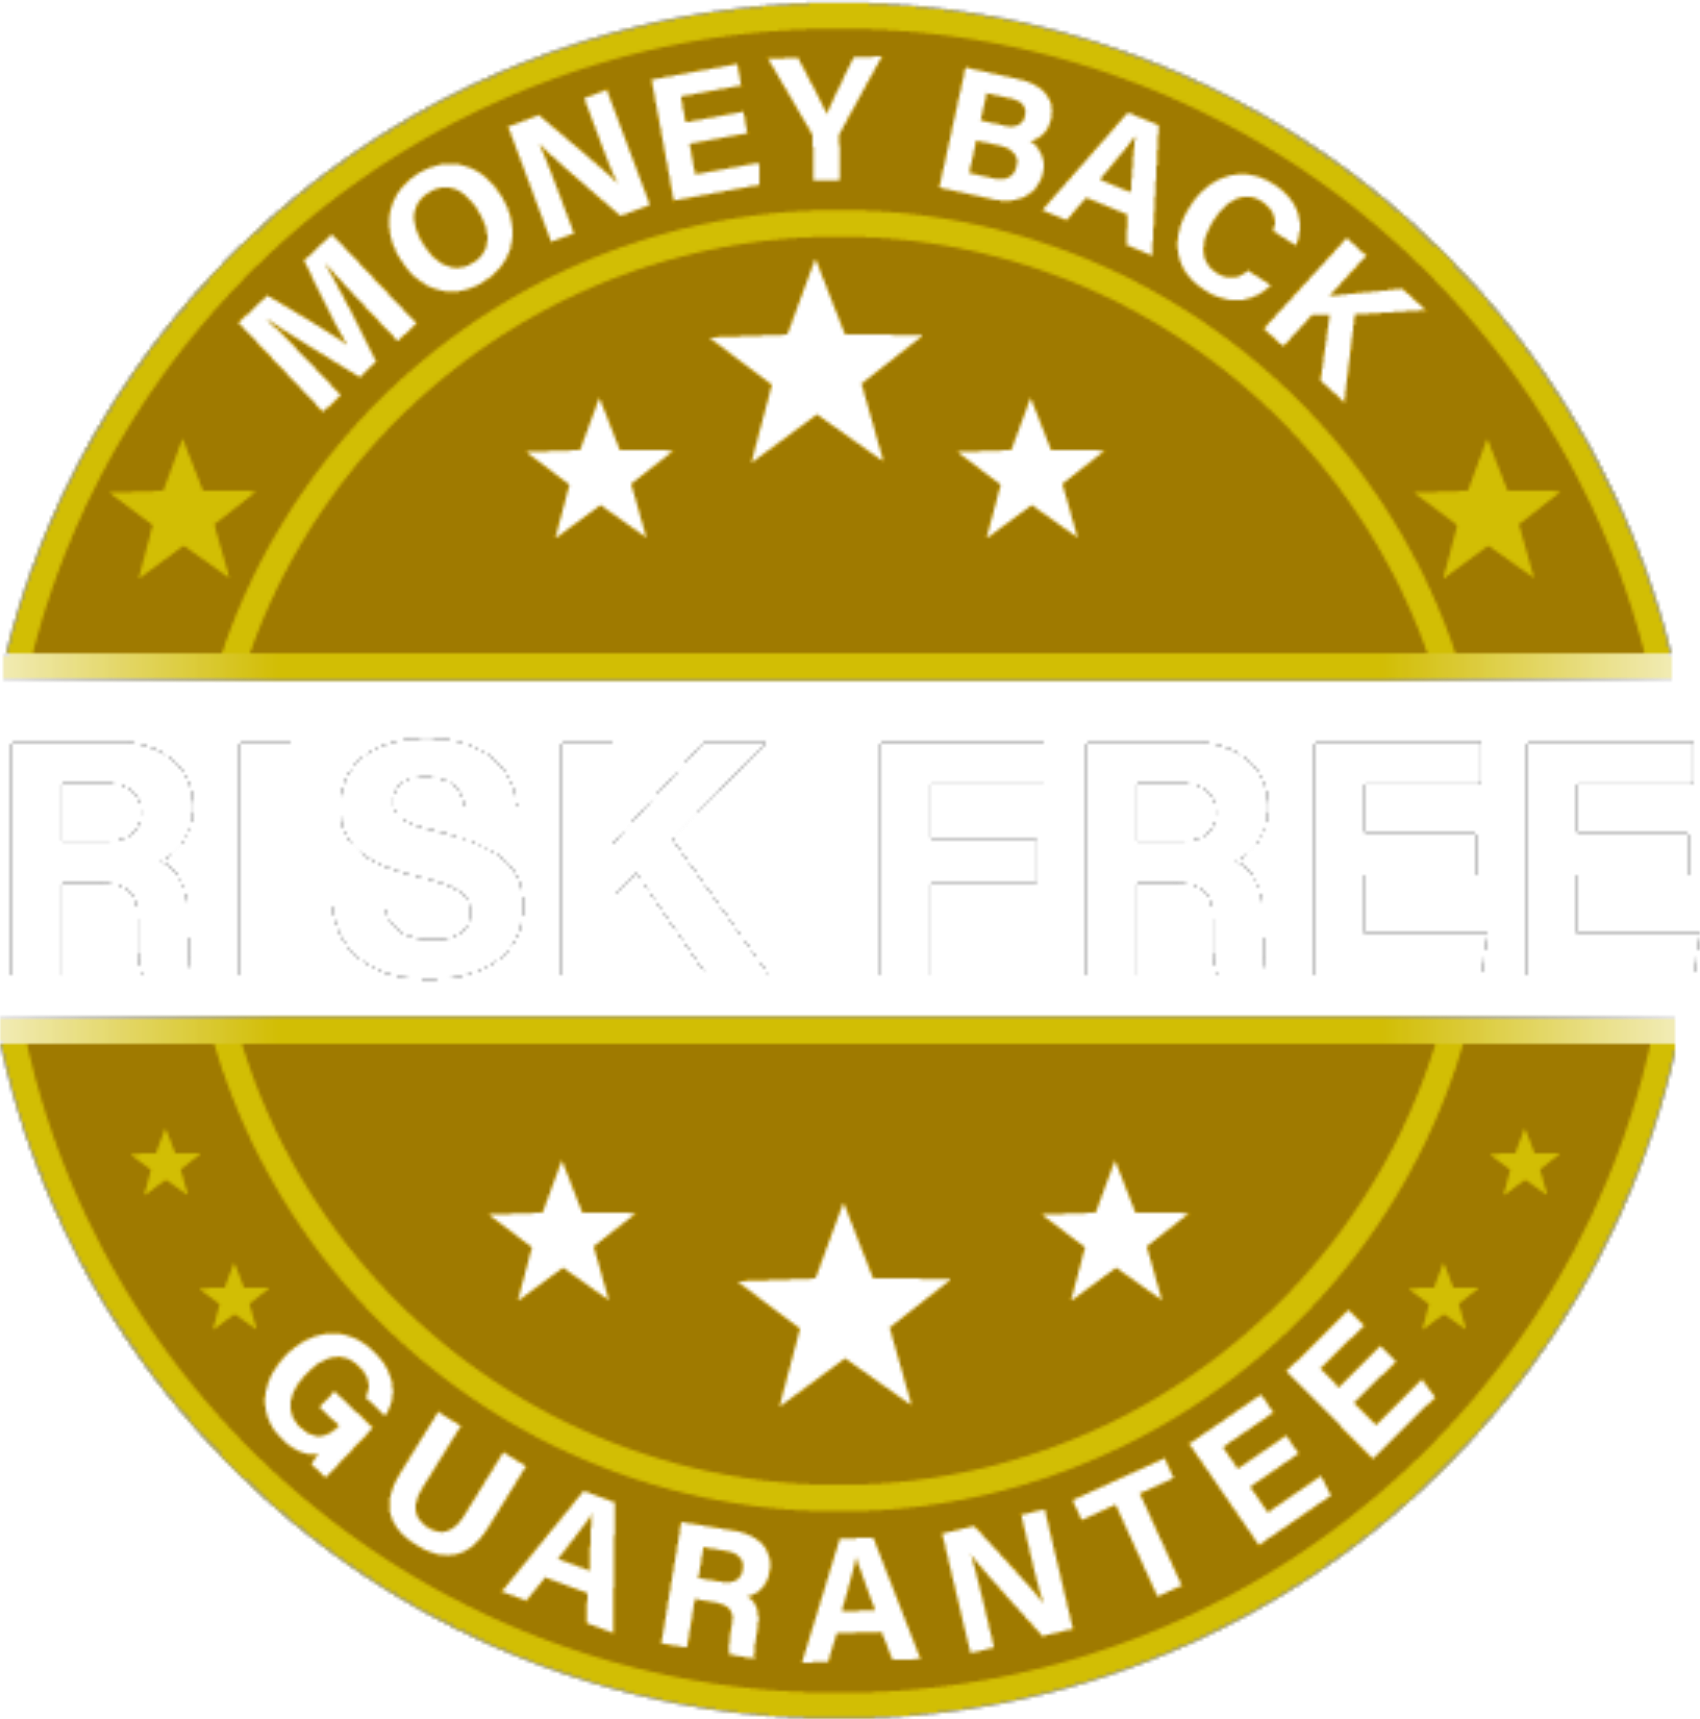 Risk free - Money back guarantee